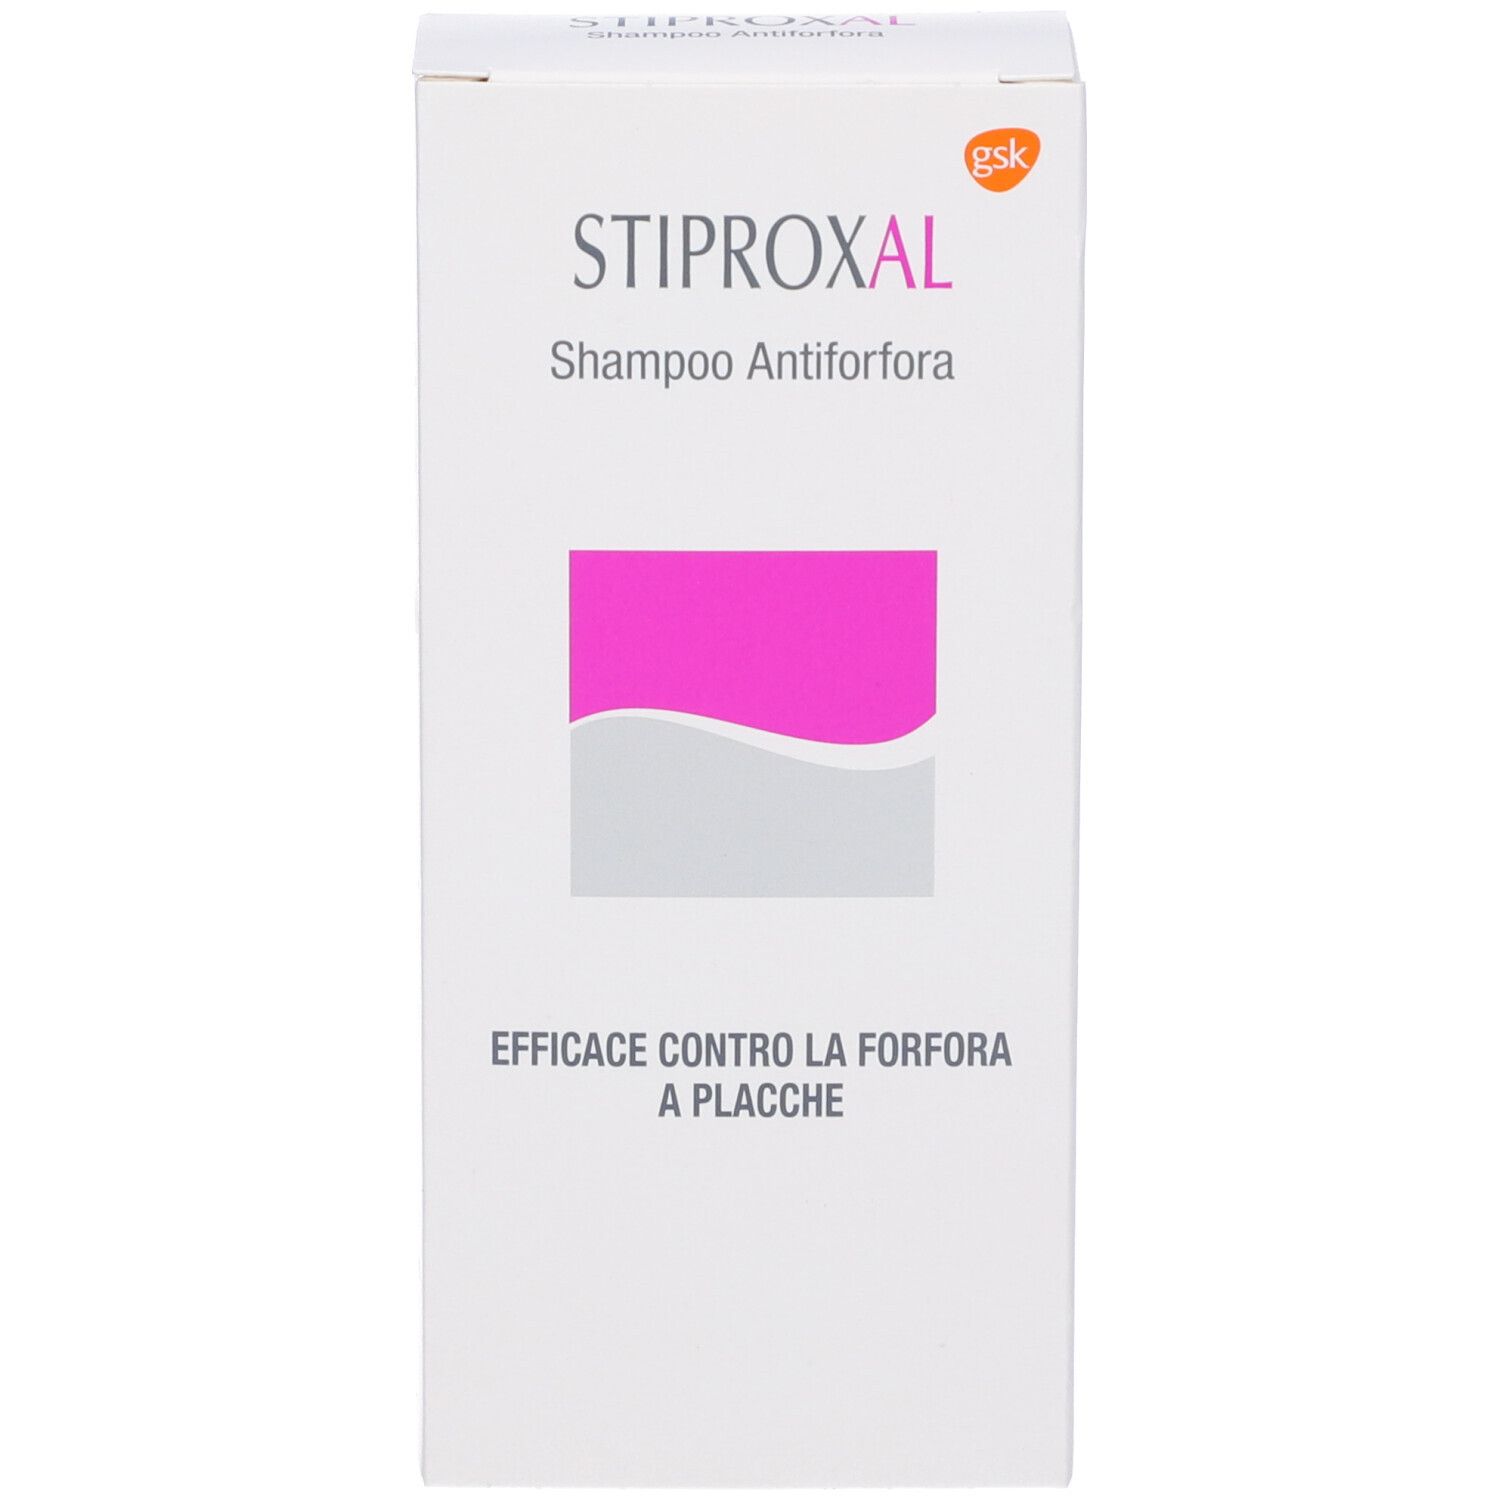 STIPROXAL® Shampoo Antiforfora